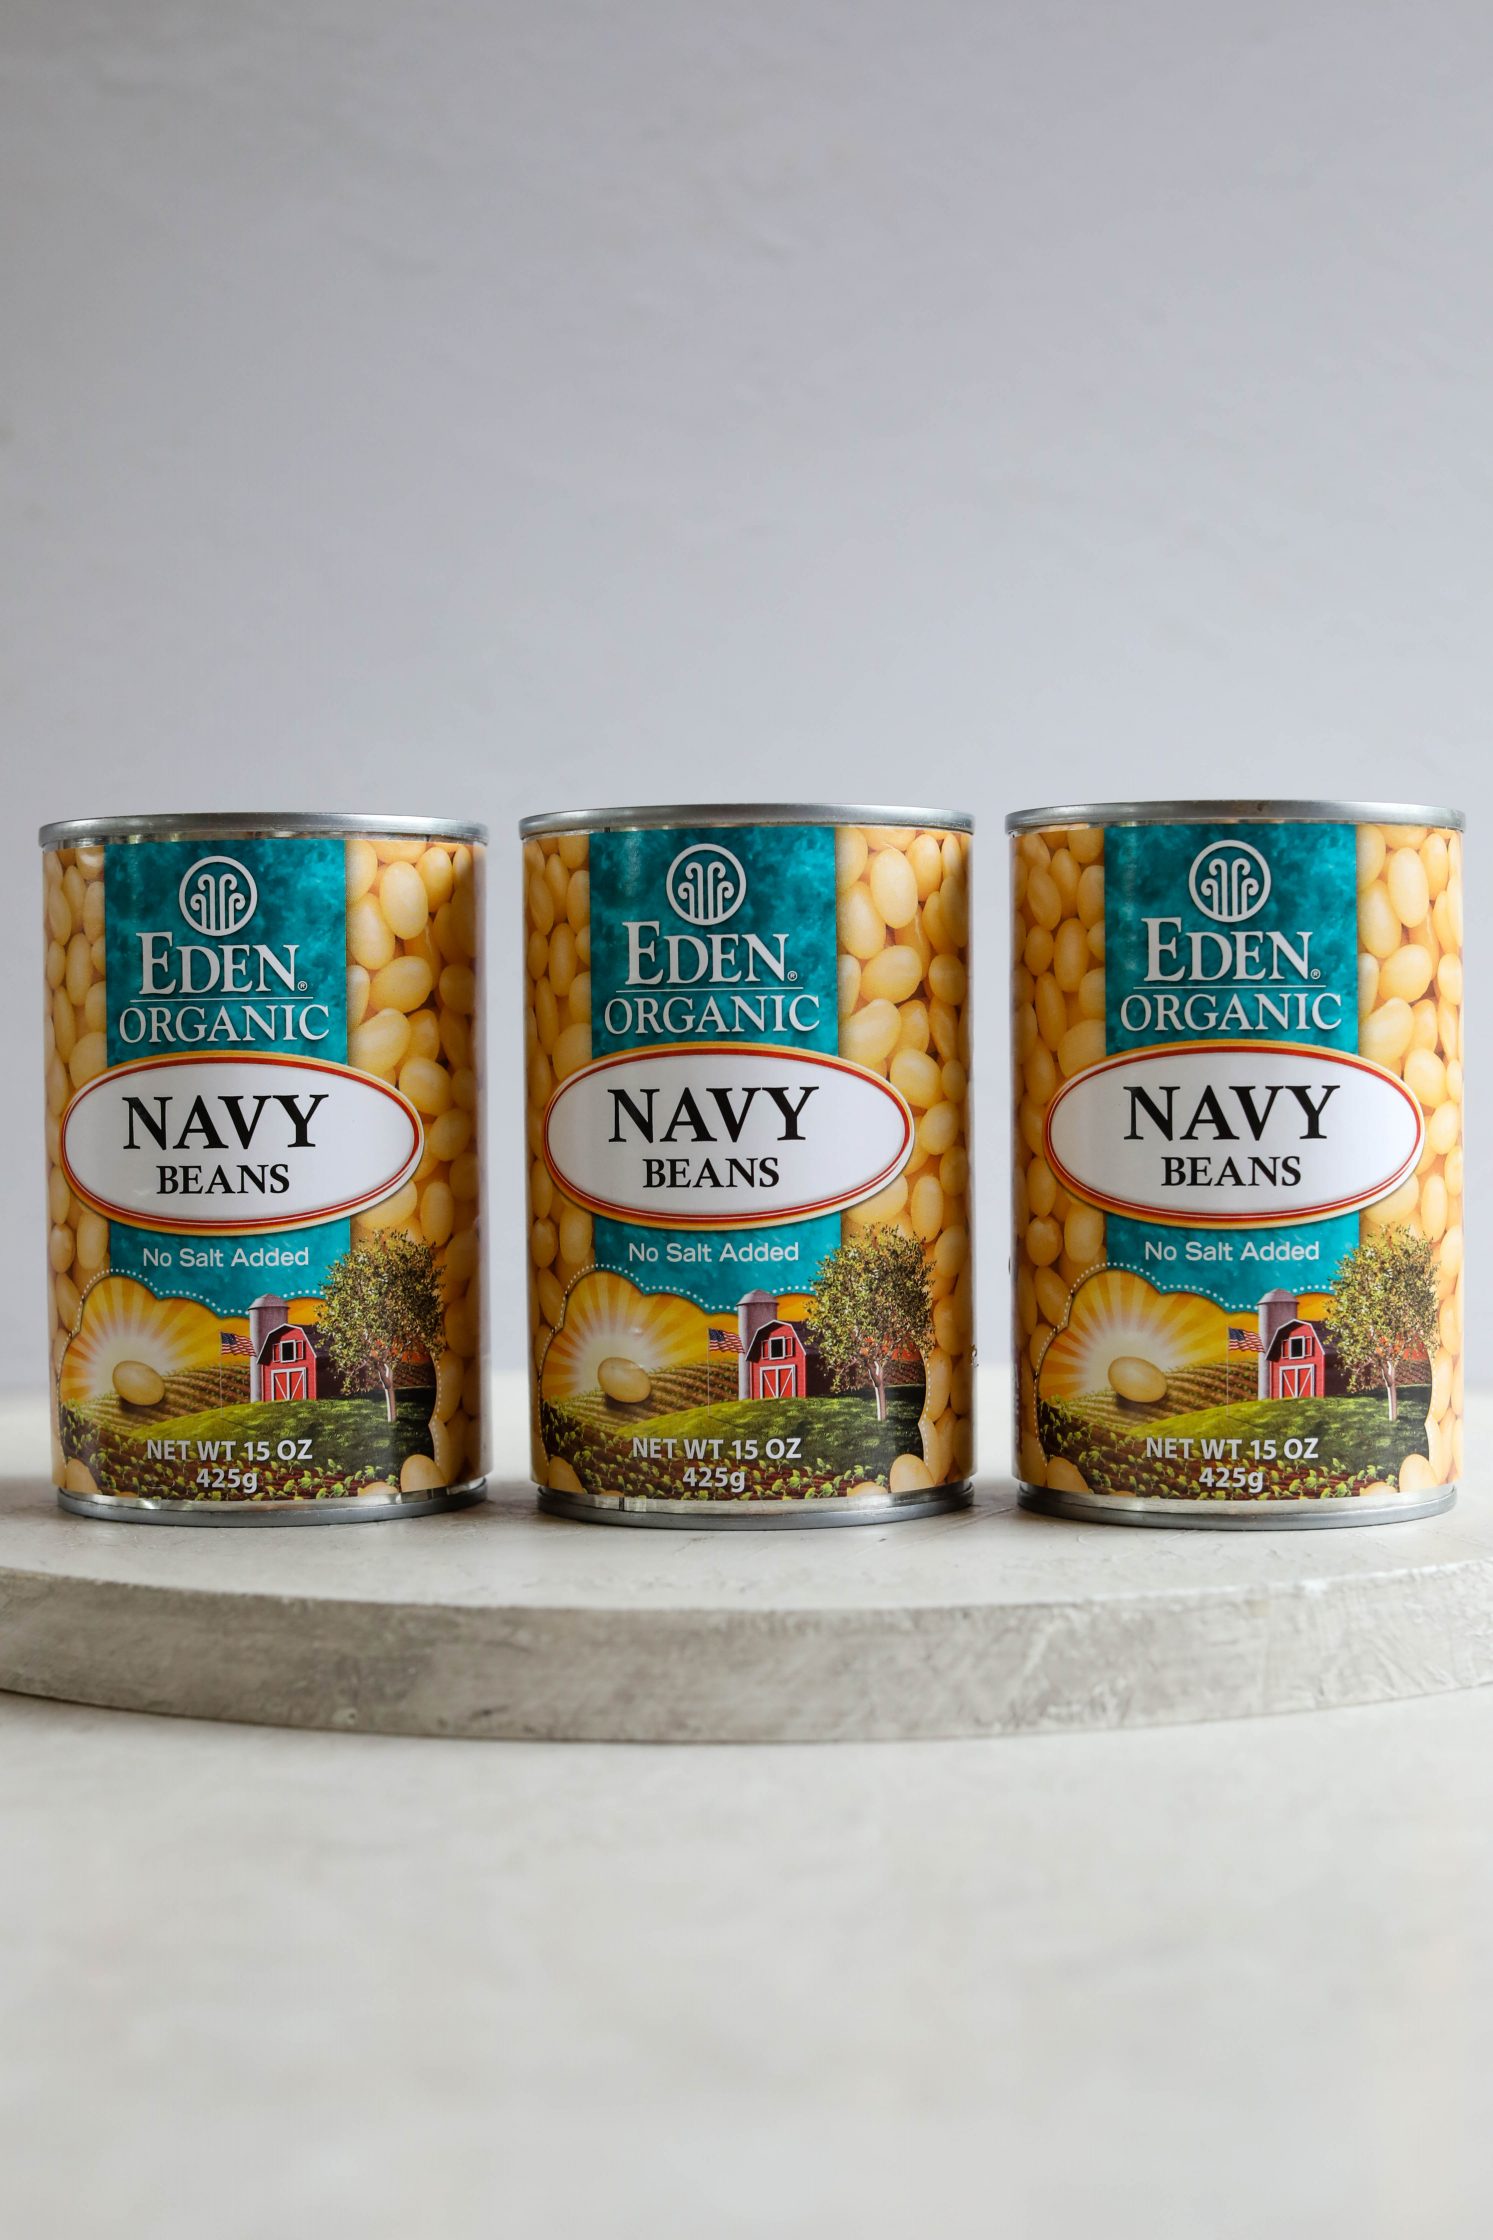 Navy Beans by Eden Foods